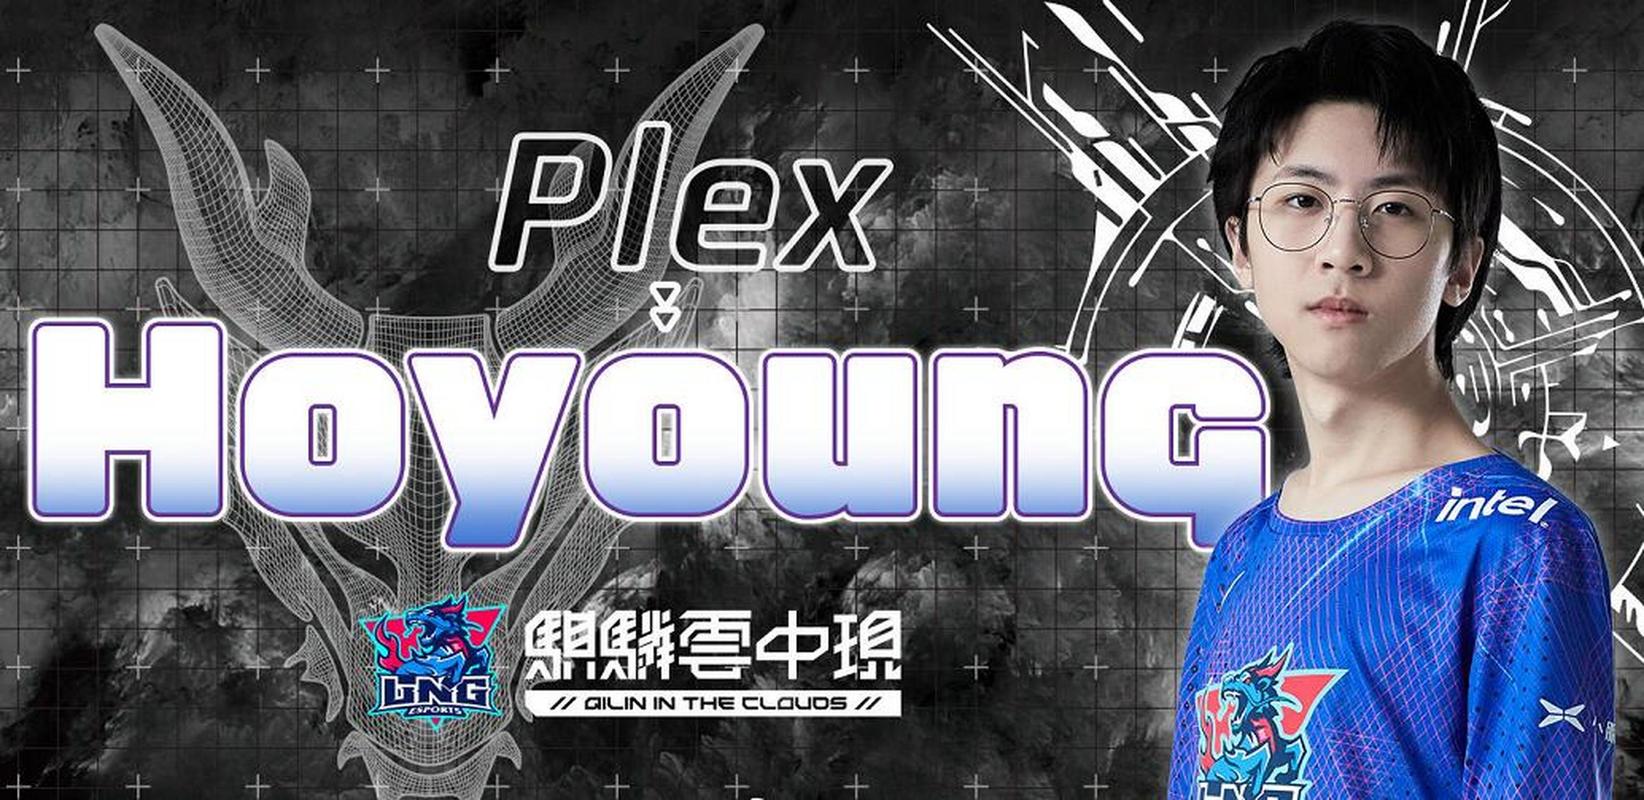 【lng中单选手plex改名为:hoyoung】 lng电子竞技俱乐部中单选手裴浩